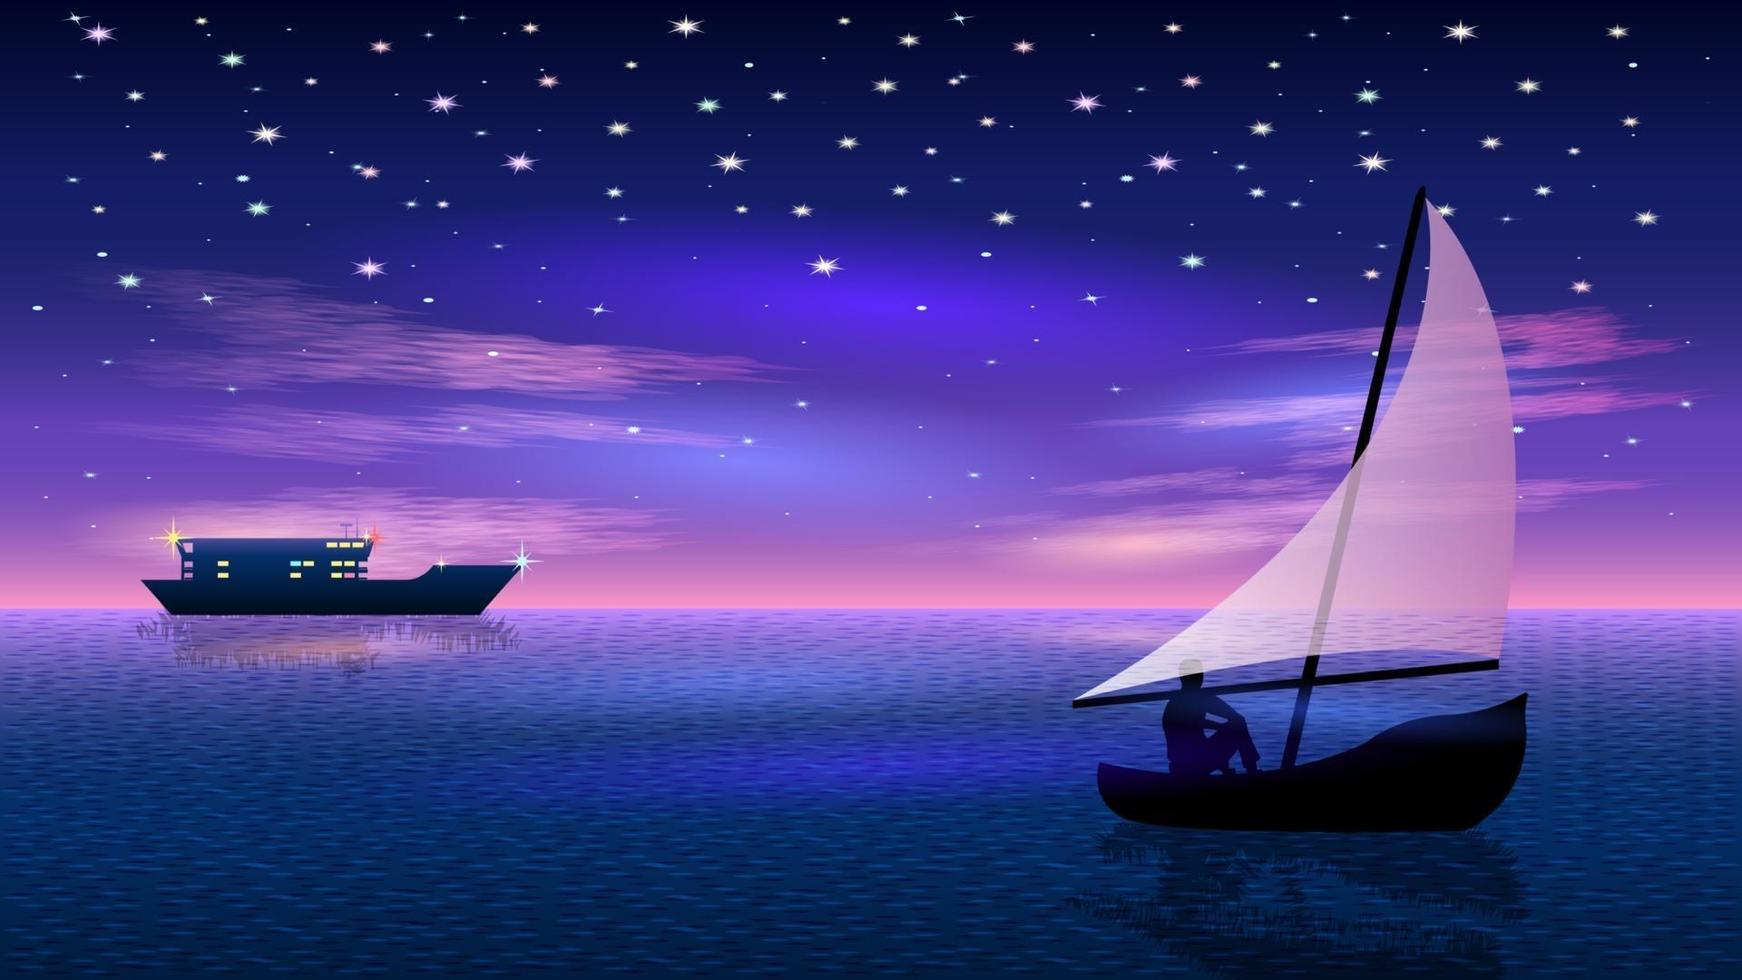 man in boat silhouette night seascape vector